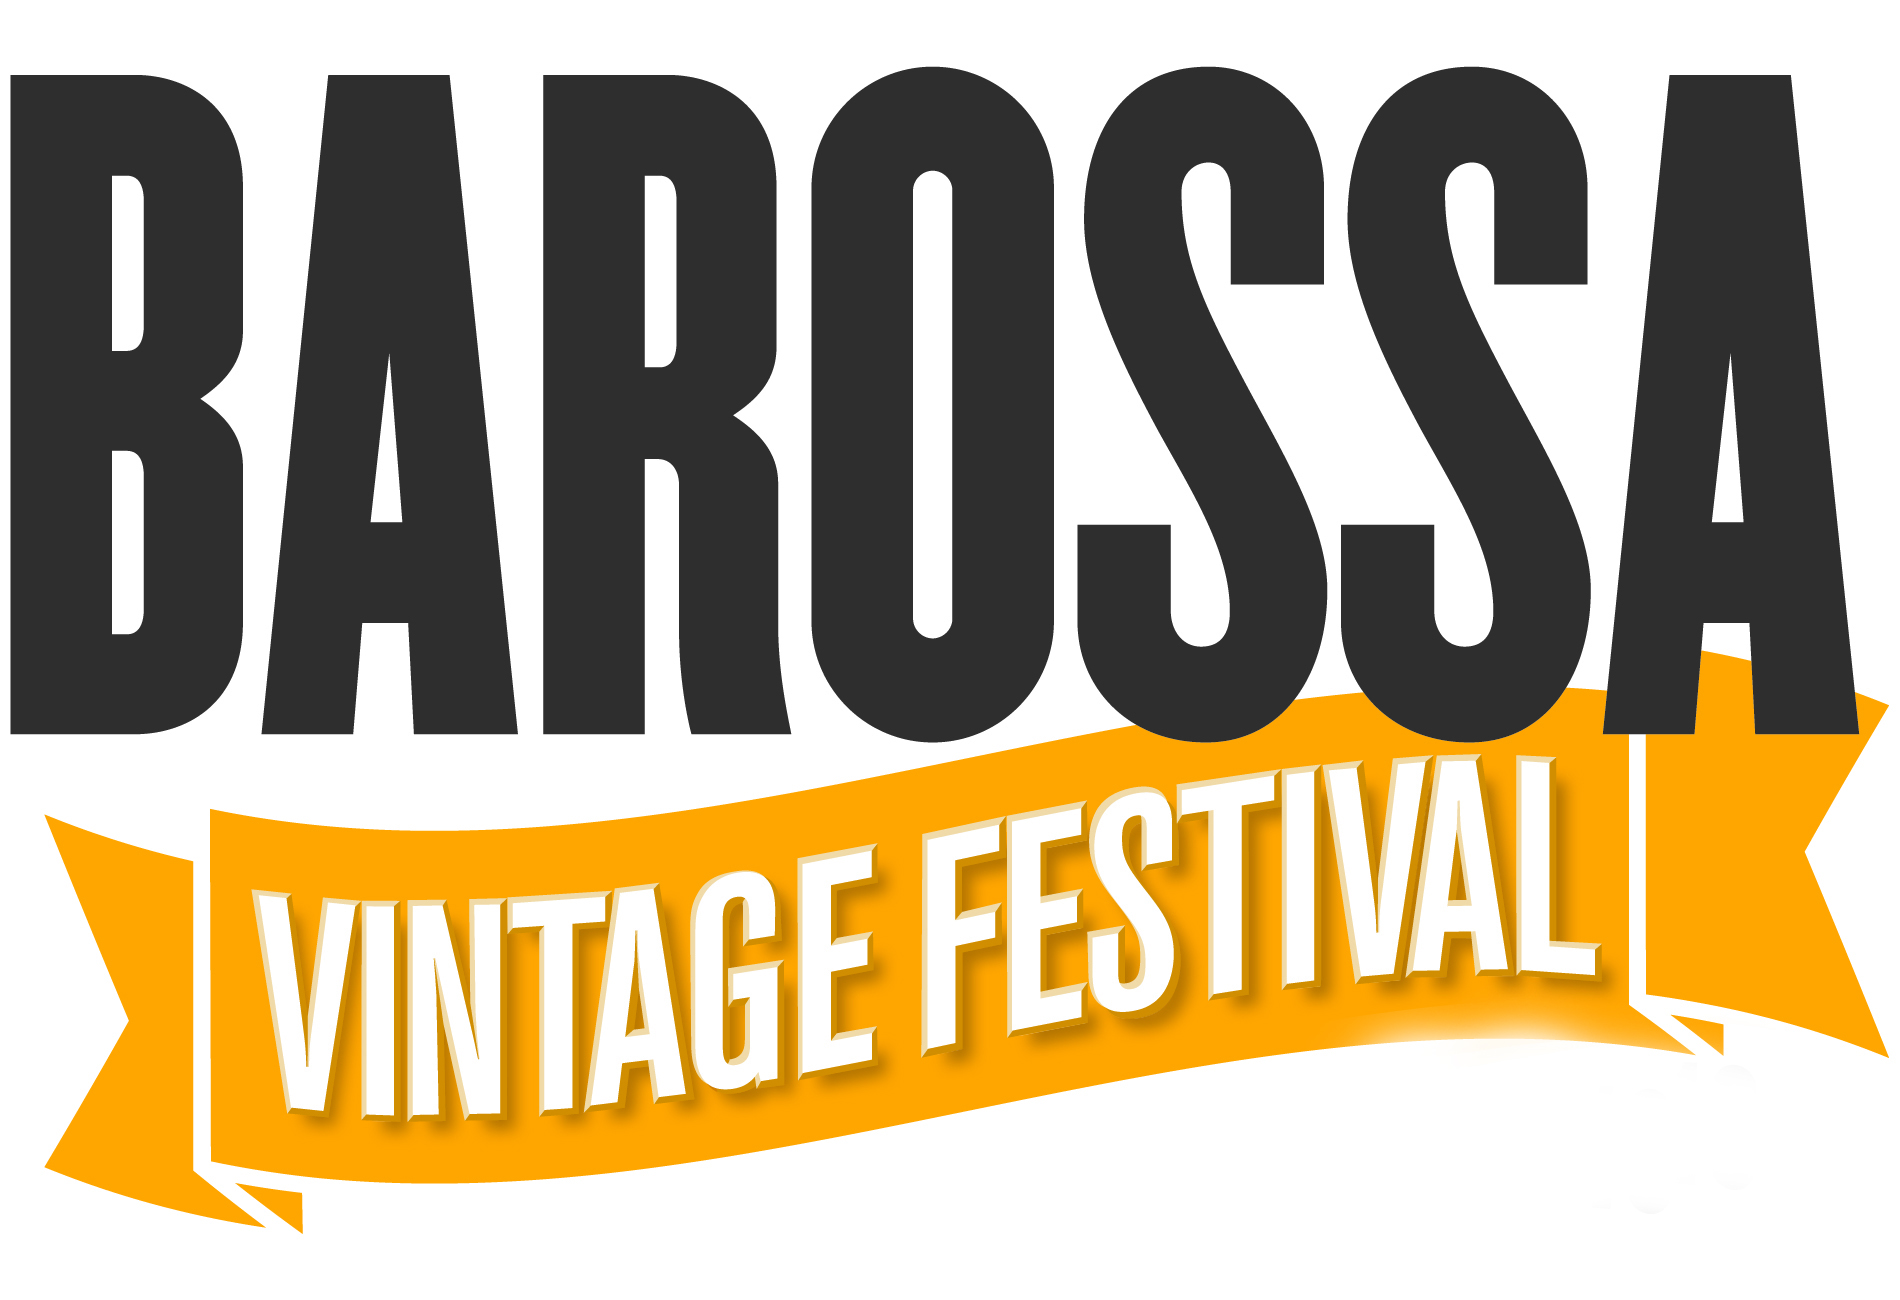 Barossa Vintage Festival logo 2019